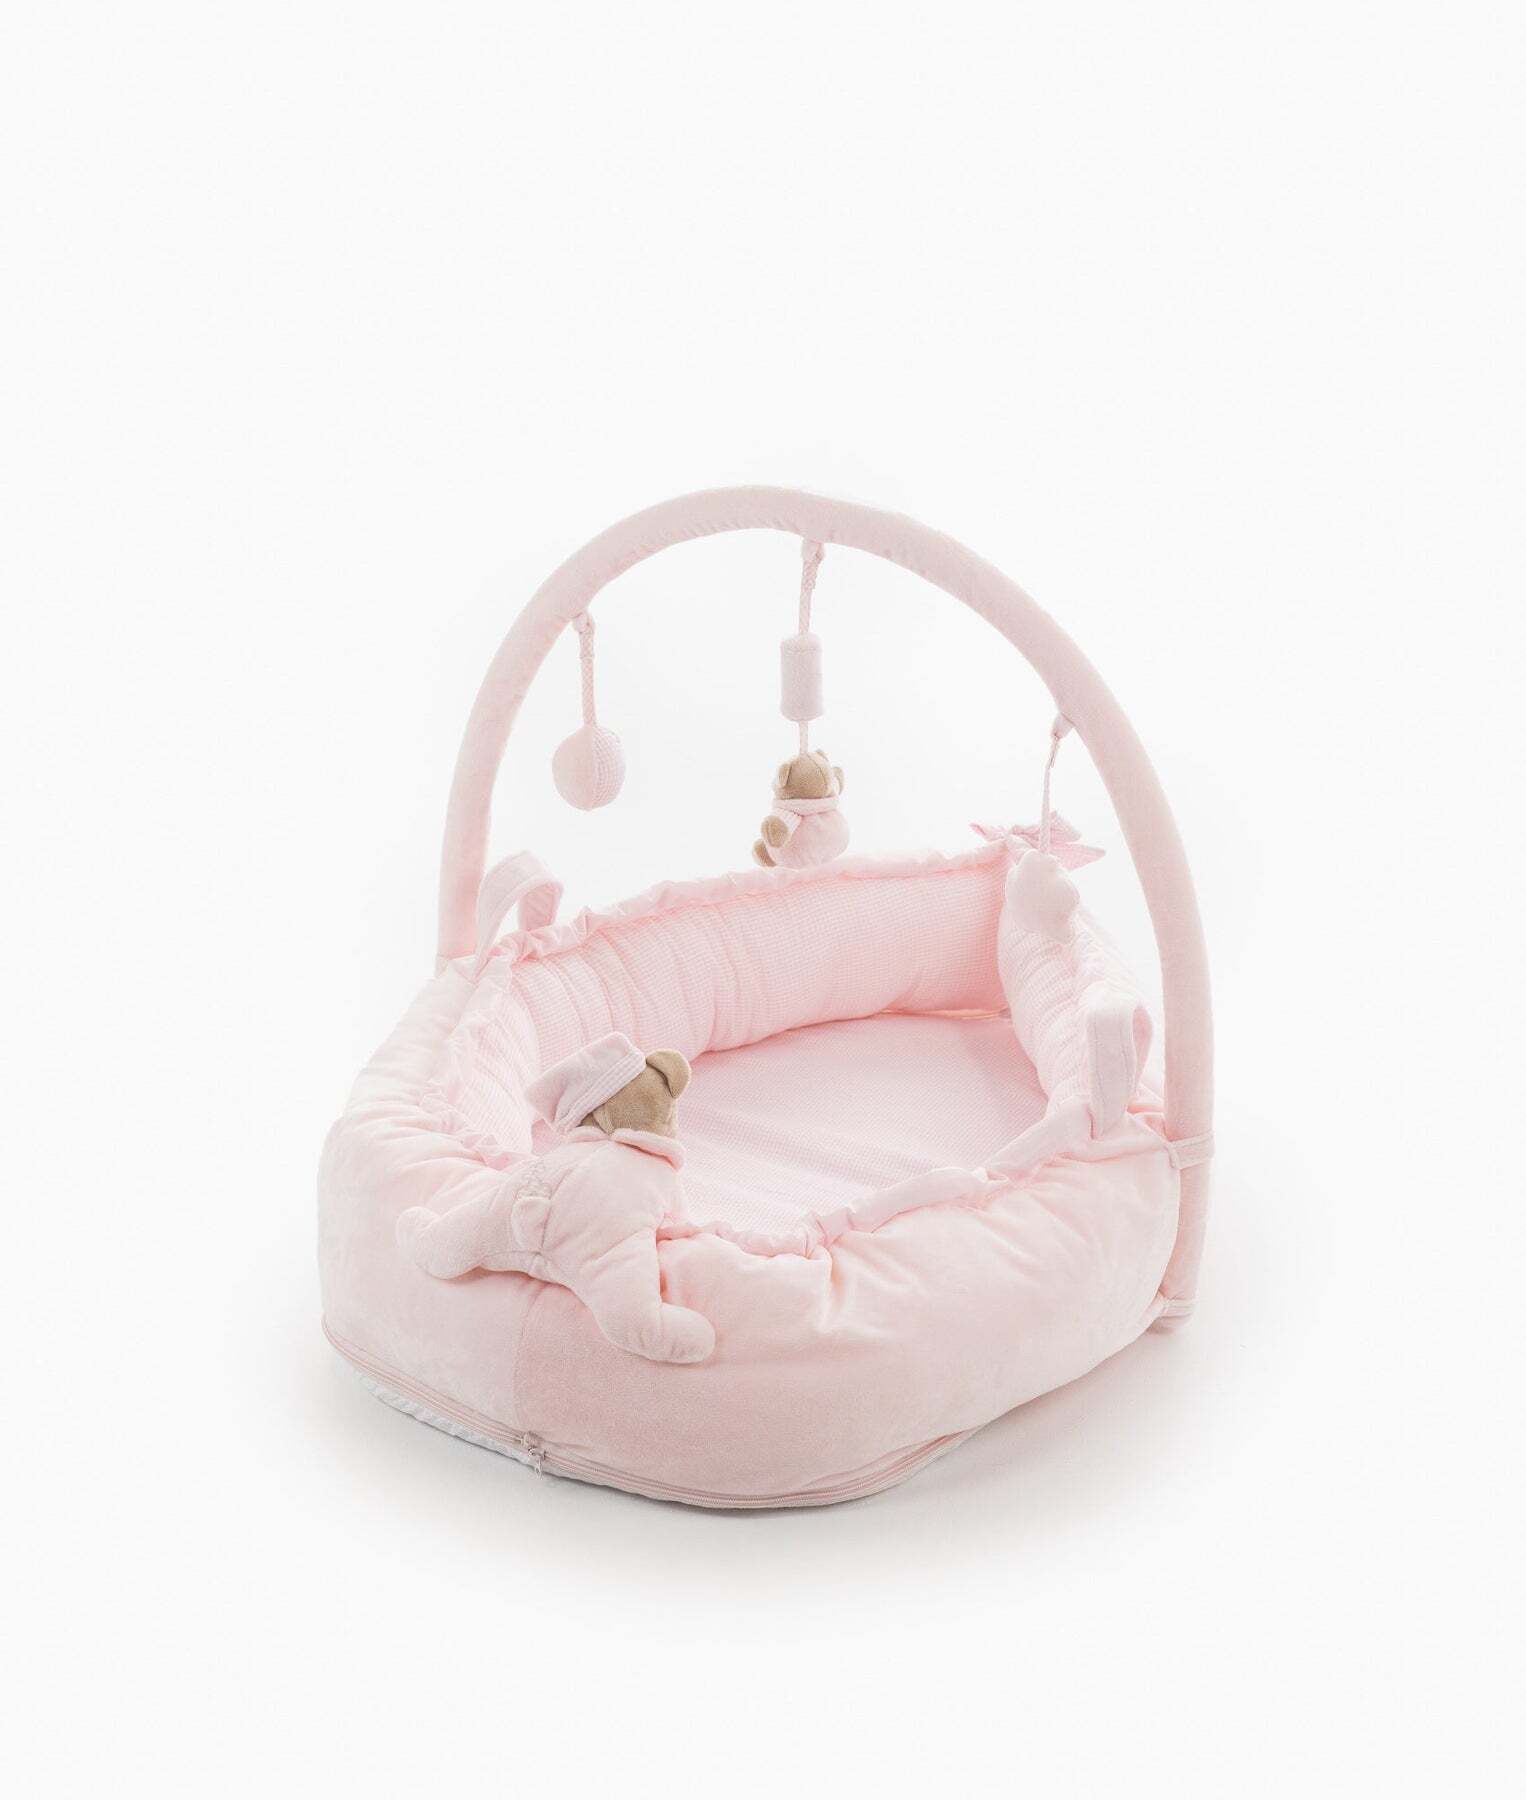 multifunction-baby-nest-pink-727_1800x1800